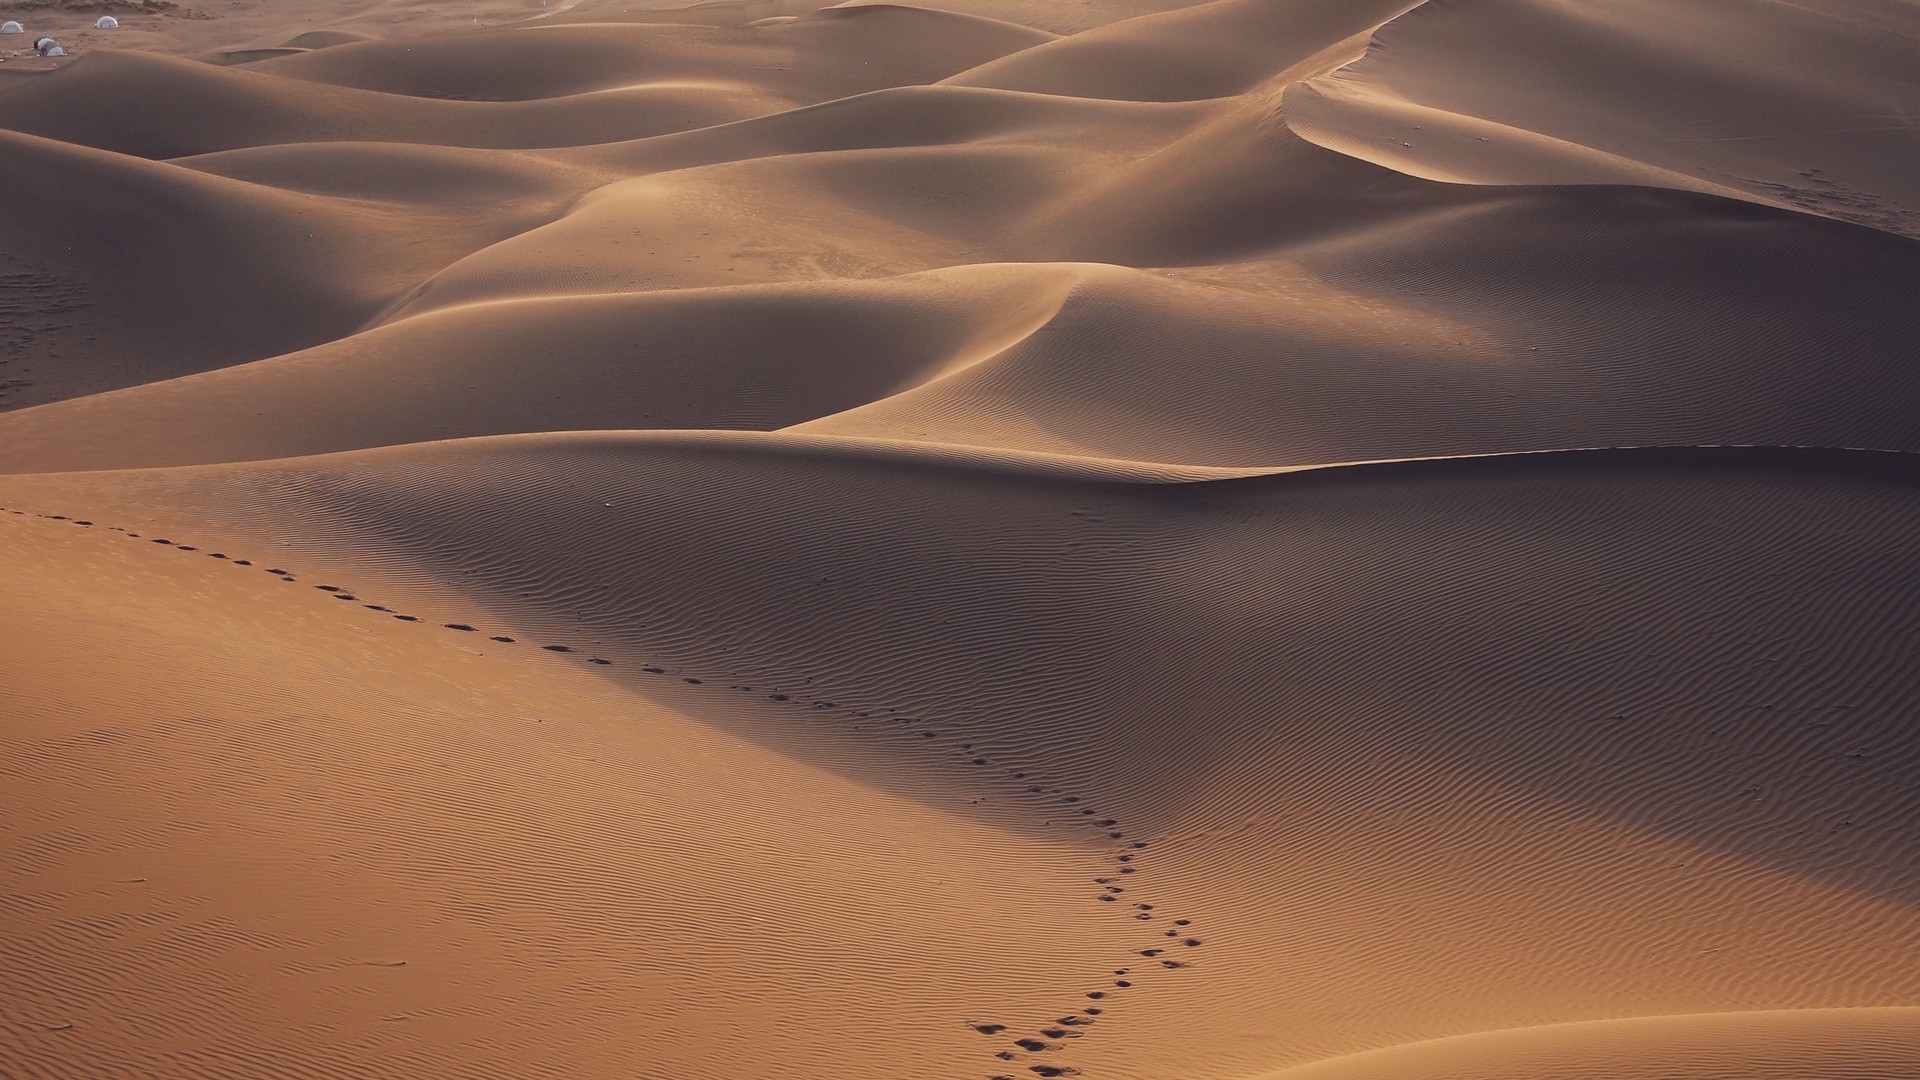 1920x1080 wallpapers: desert, dunes, sand, footprints (image)